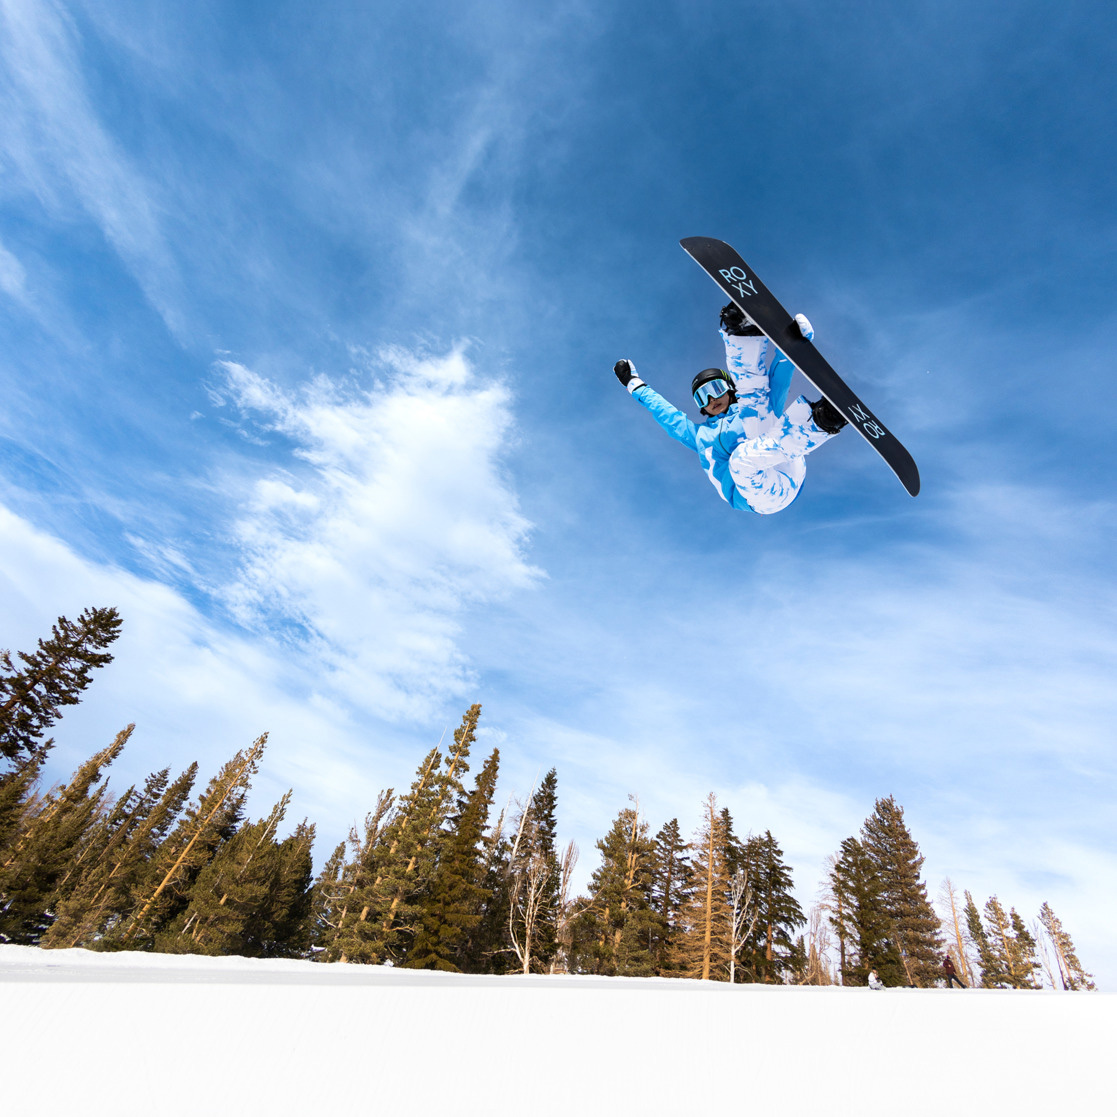 Roxy XOXO Pro Women's All Mountain Snowboard